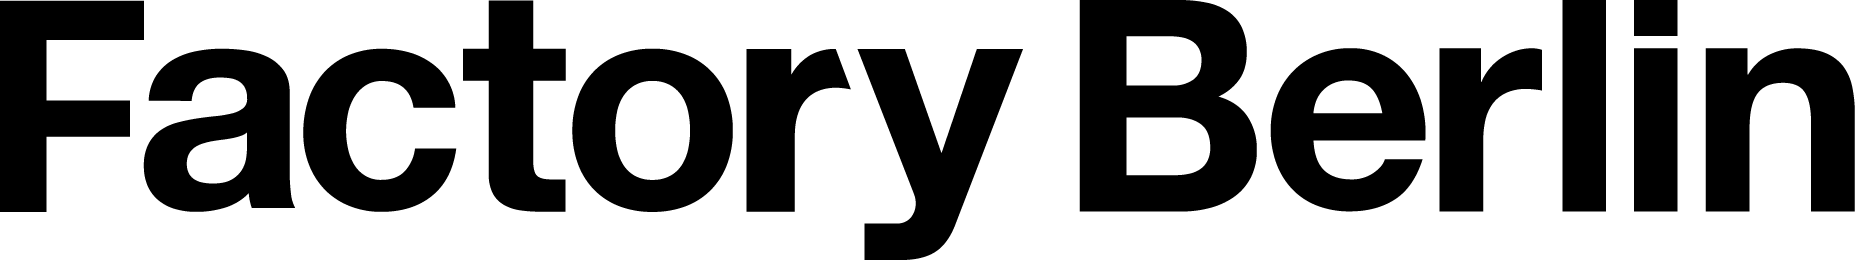 2019-factoryberlin_logo_black (1).png